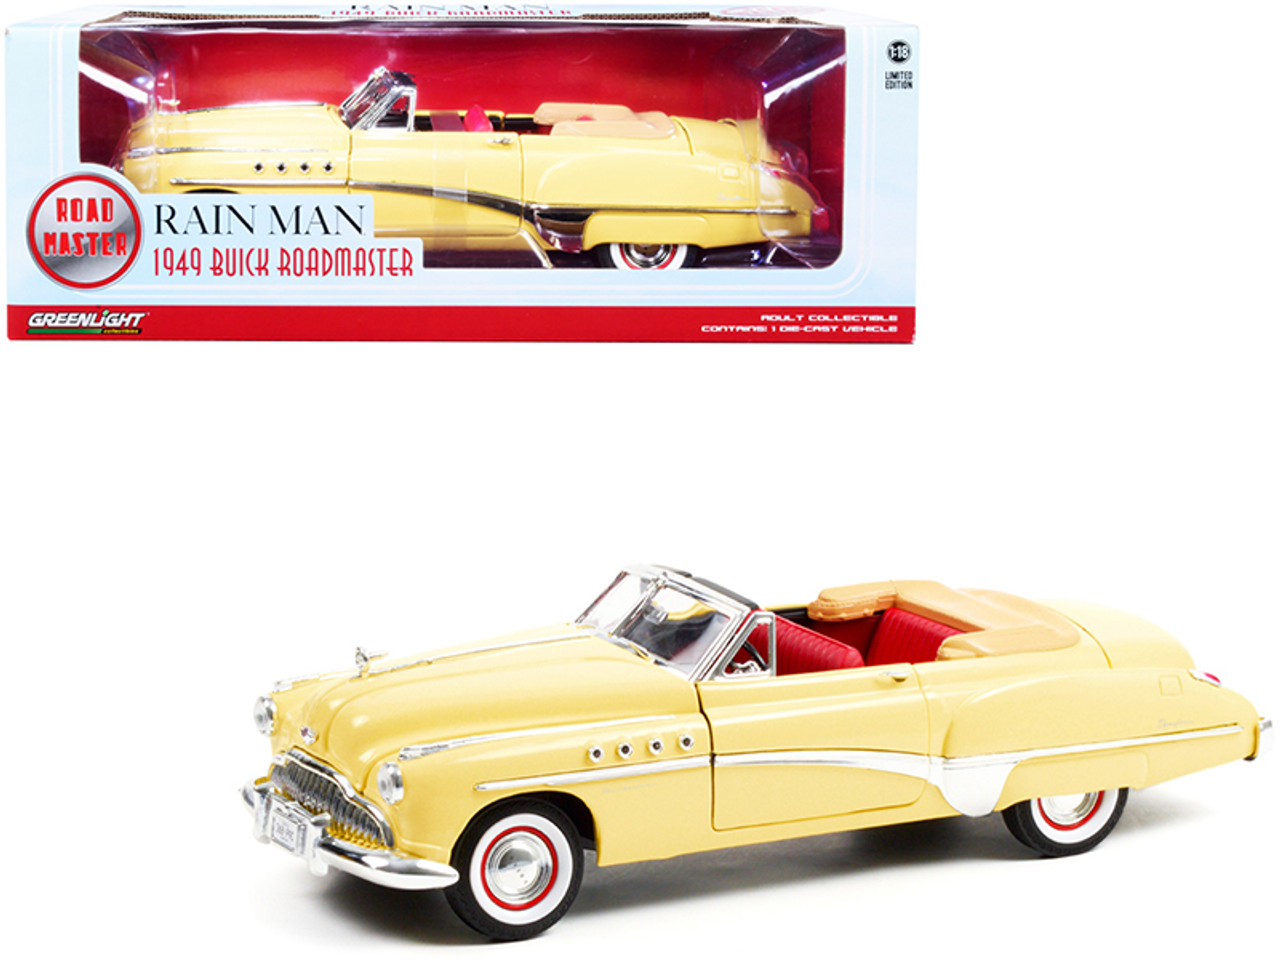 1/18 Greenlight 1949 Buick Roadmaster Convertible (Charlie Babbitt's) Yellow with Red Interior "Rain Man" (1988) Movie Diecast Car Model